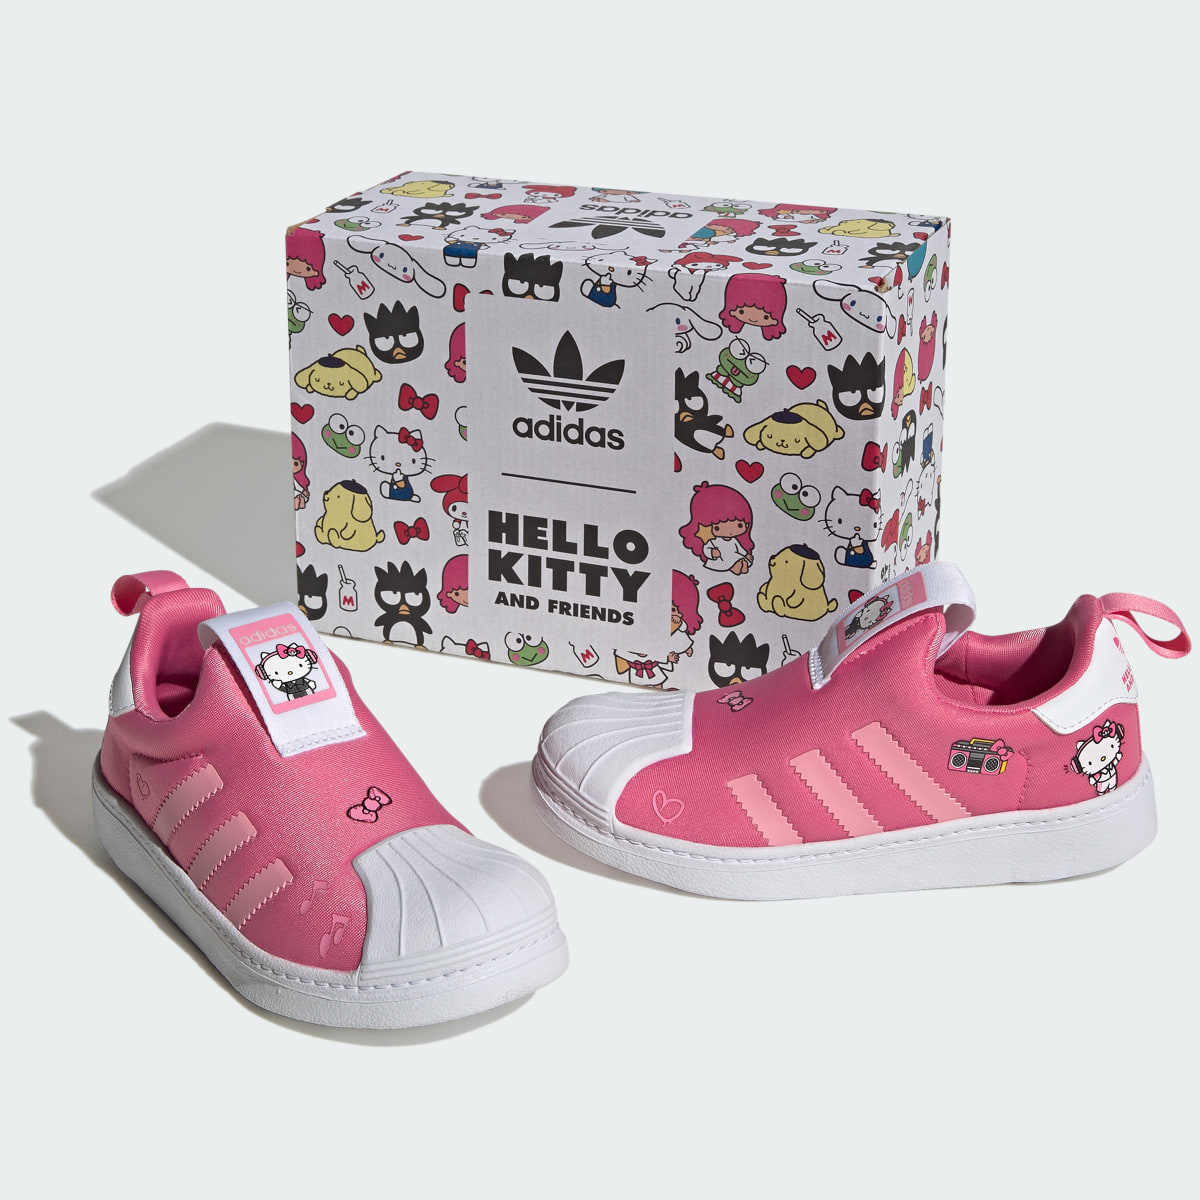 Adidas Tenis Superstar 360 adidas Originals x Hello Kitty and Friends Kids. 8